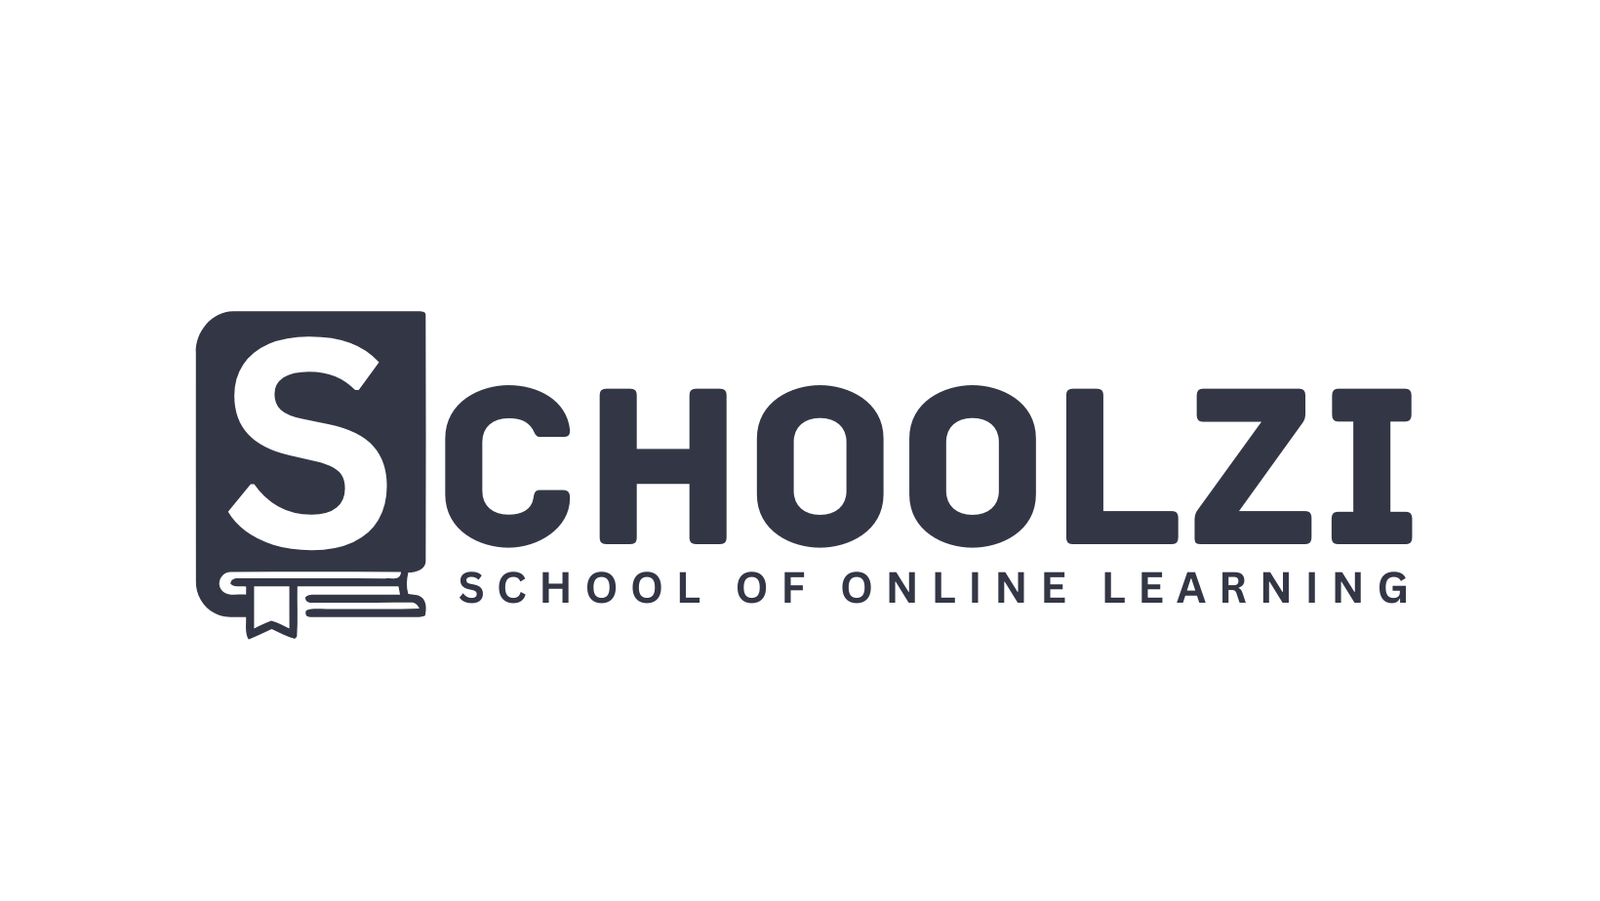 Schoolzi.com - Founded by Qasim Tariq